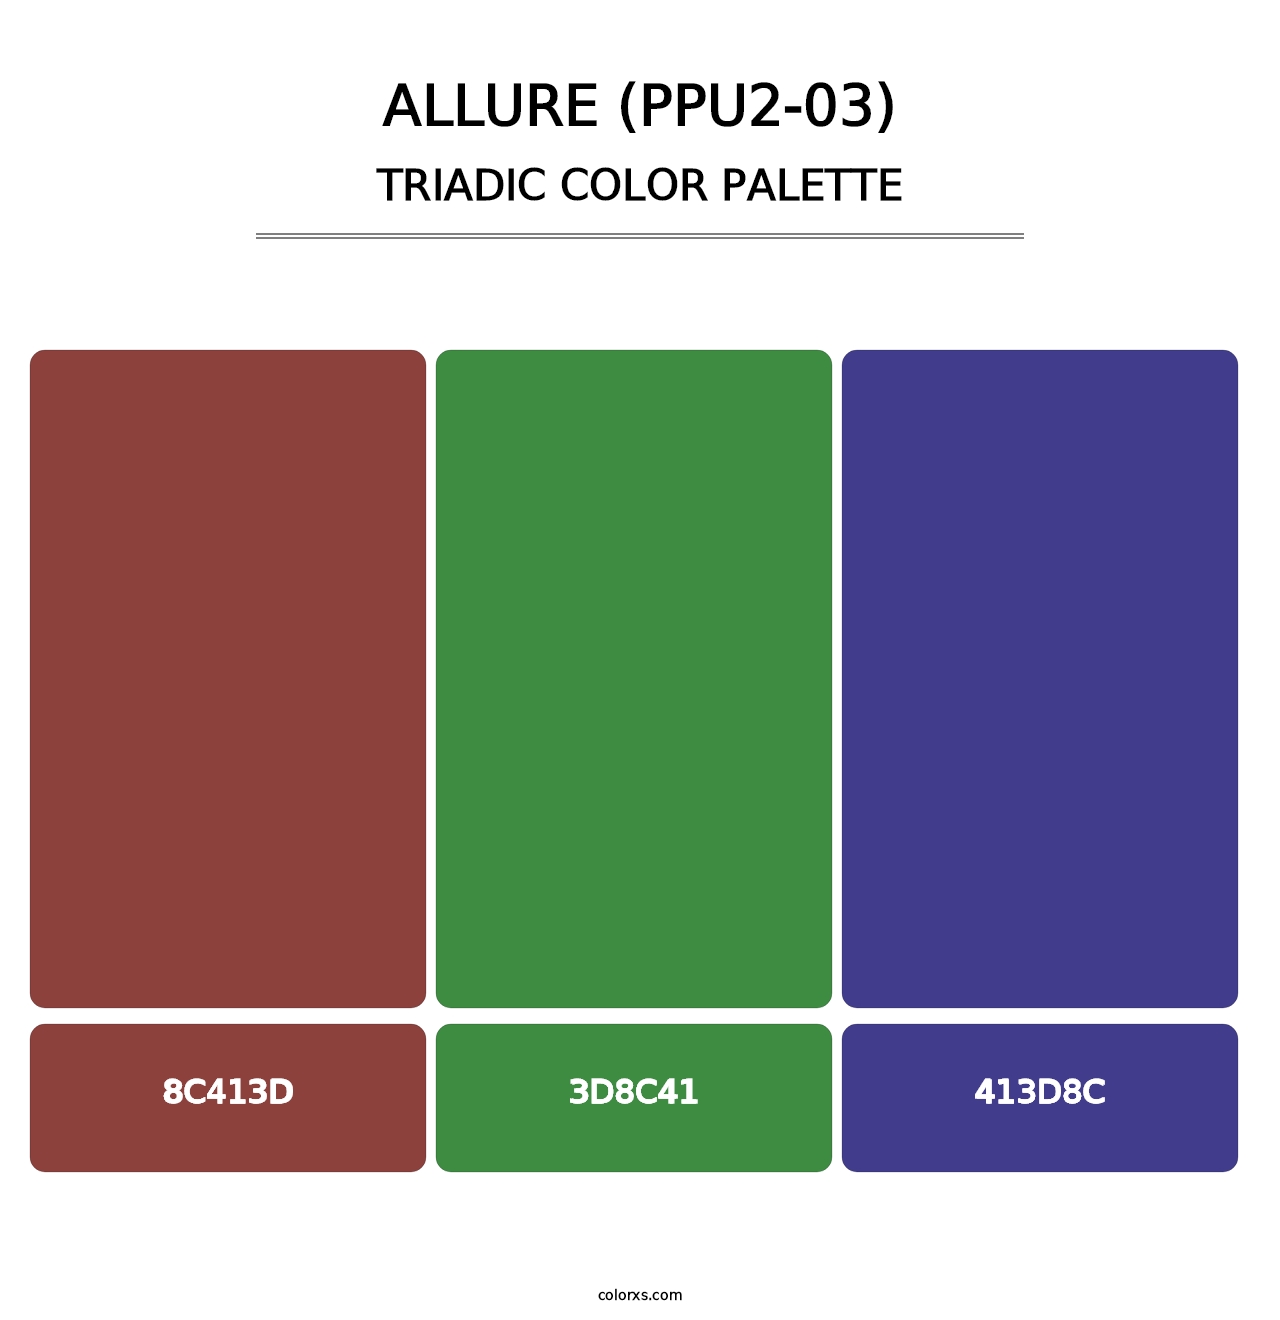 Allure (PPU2-03) - Triadic Color Palette